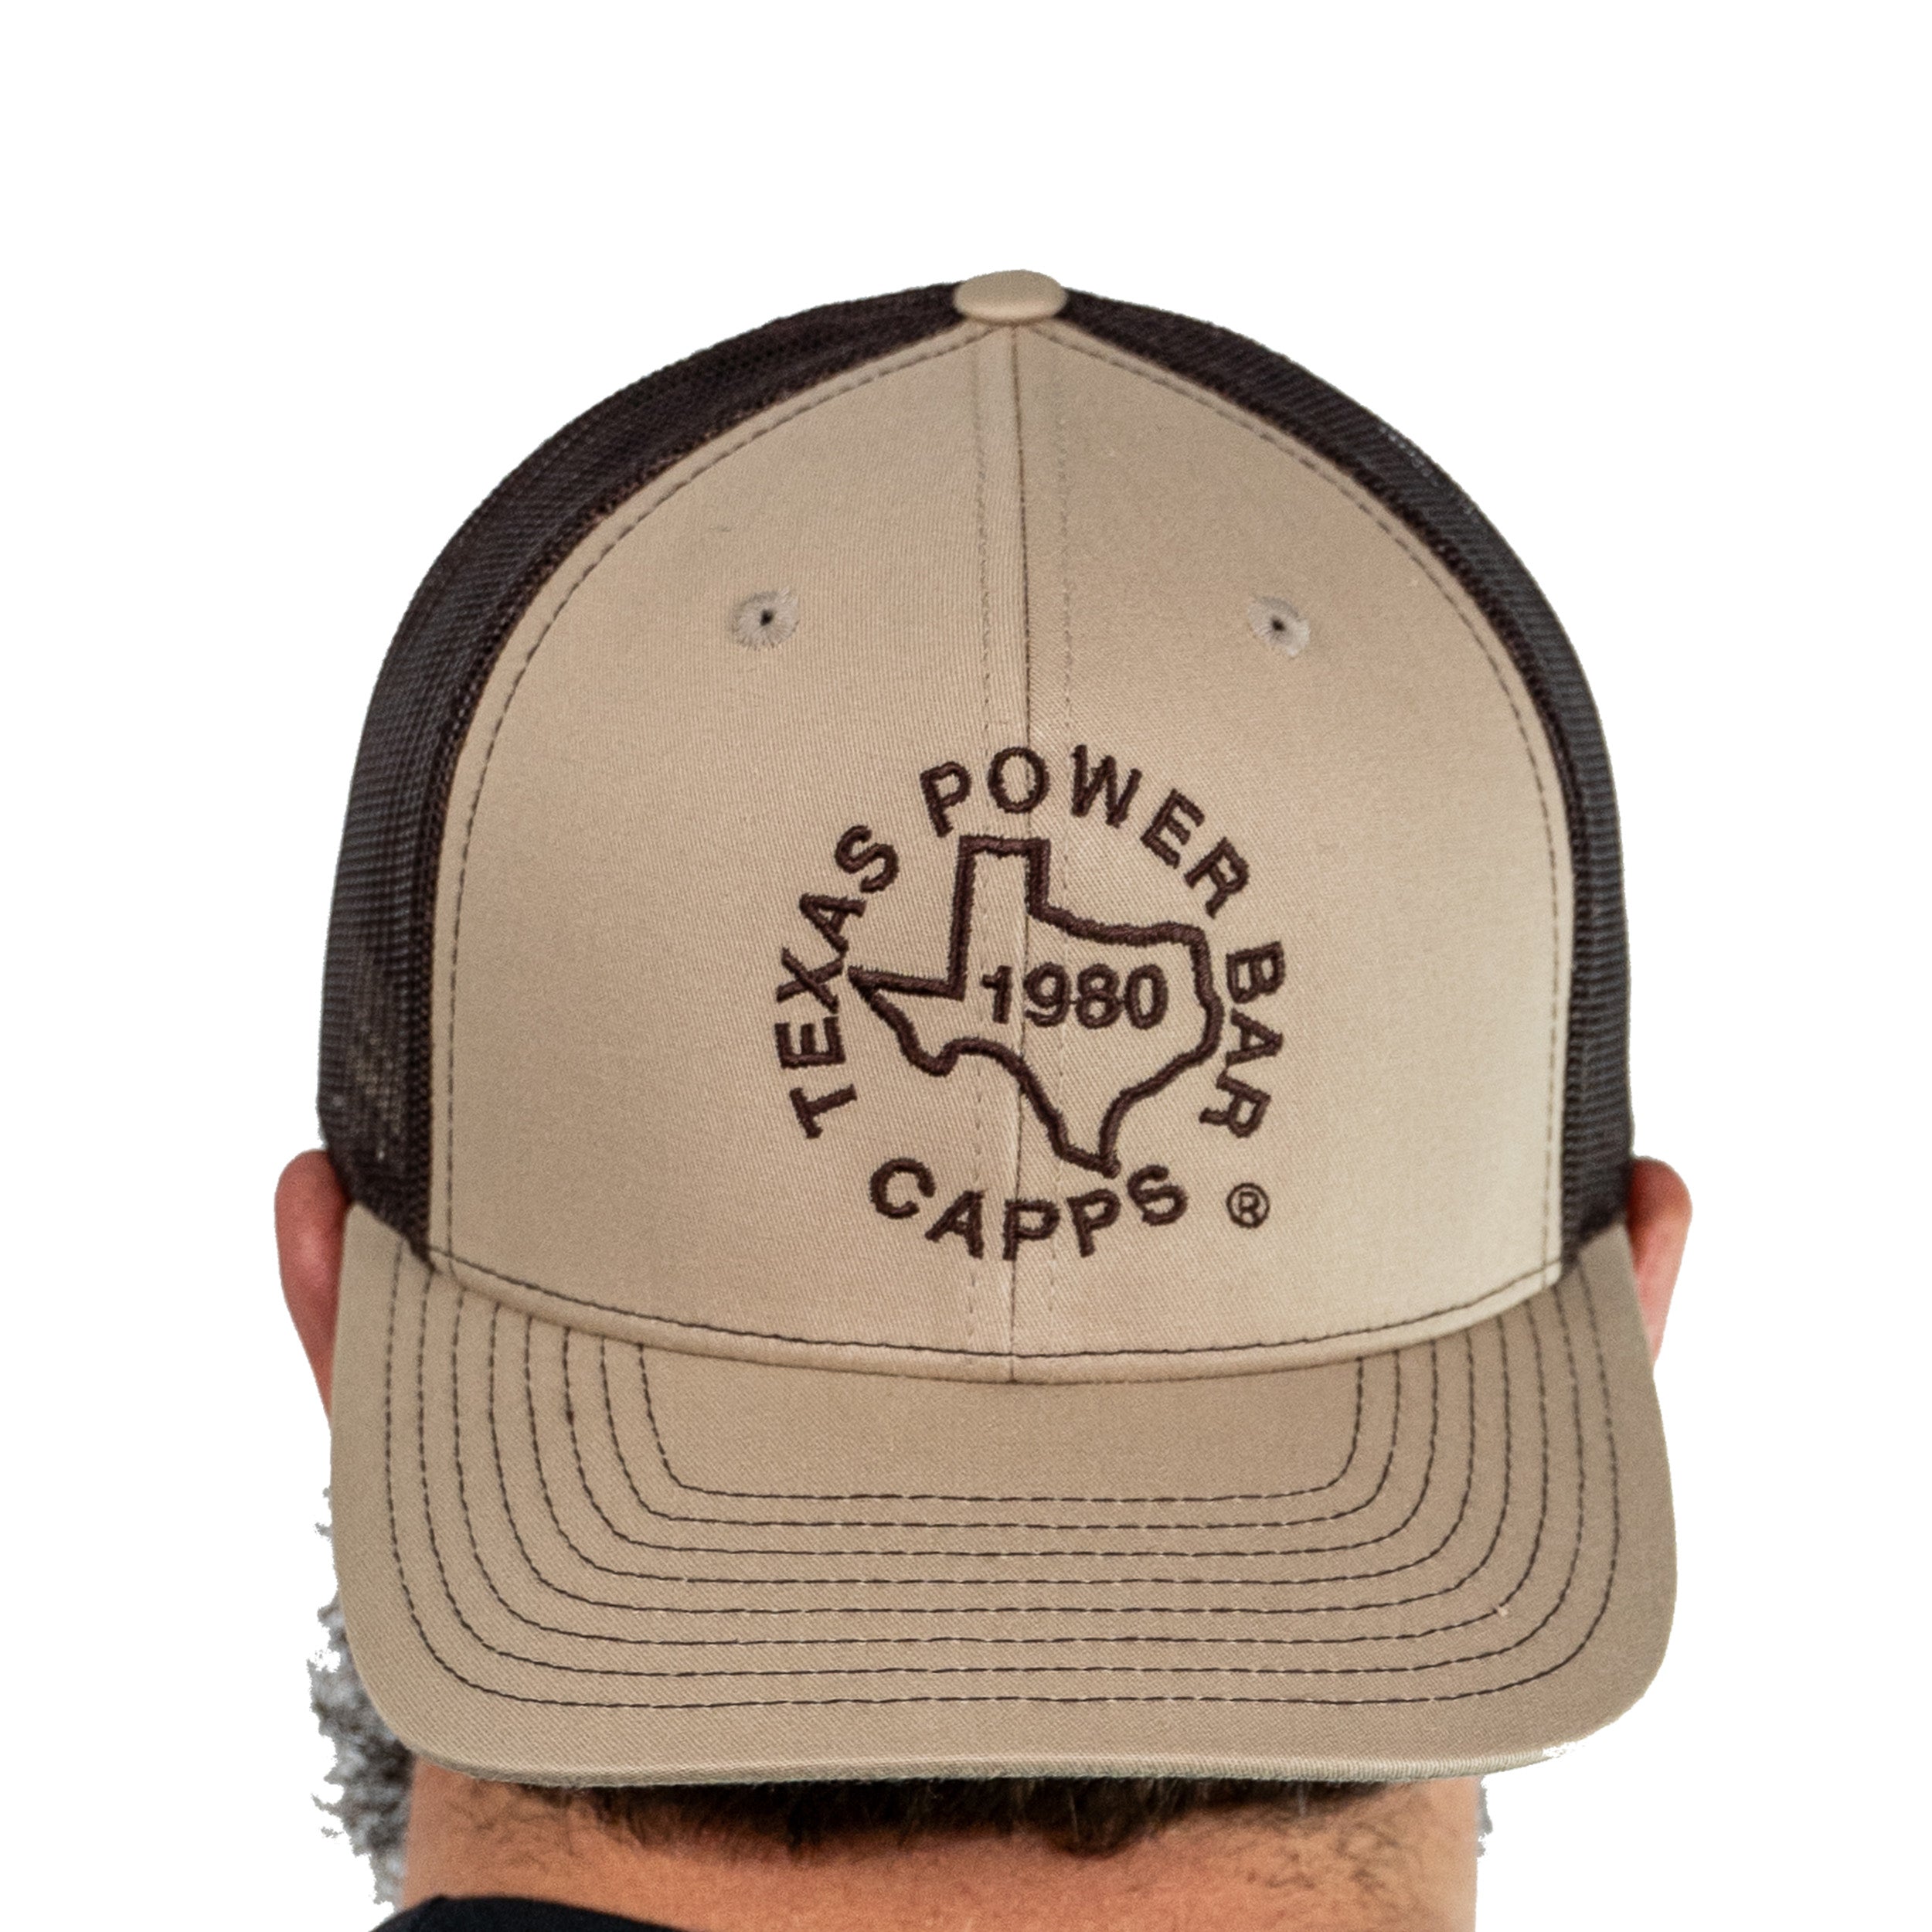 The "Original" Trucker Hat